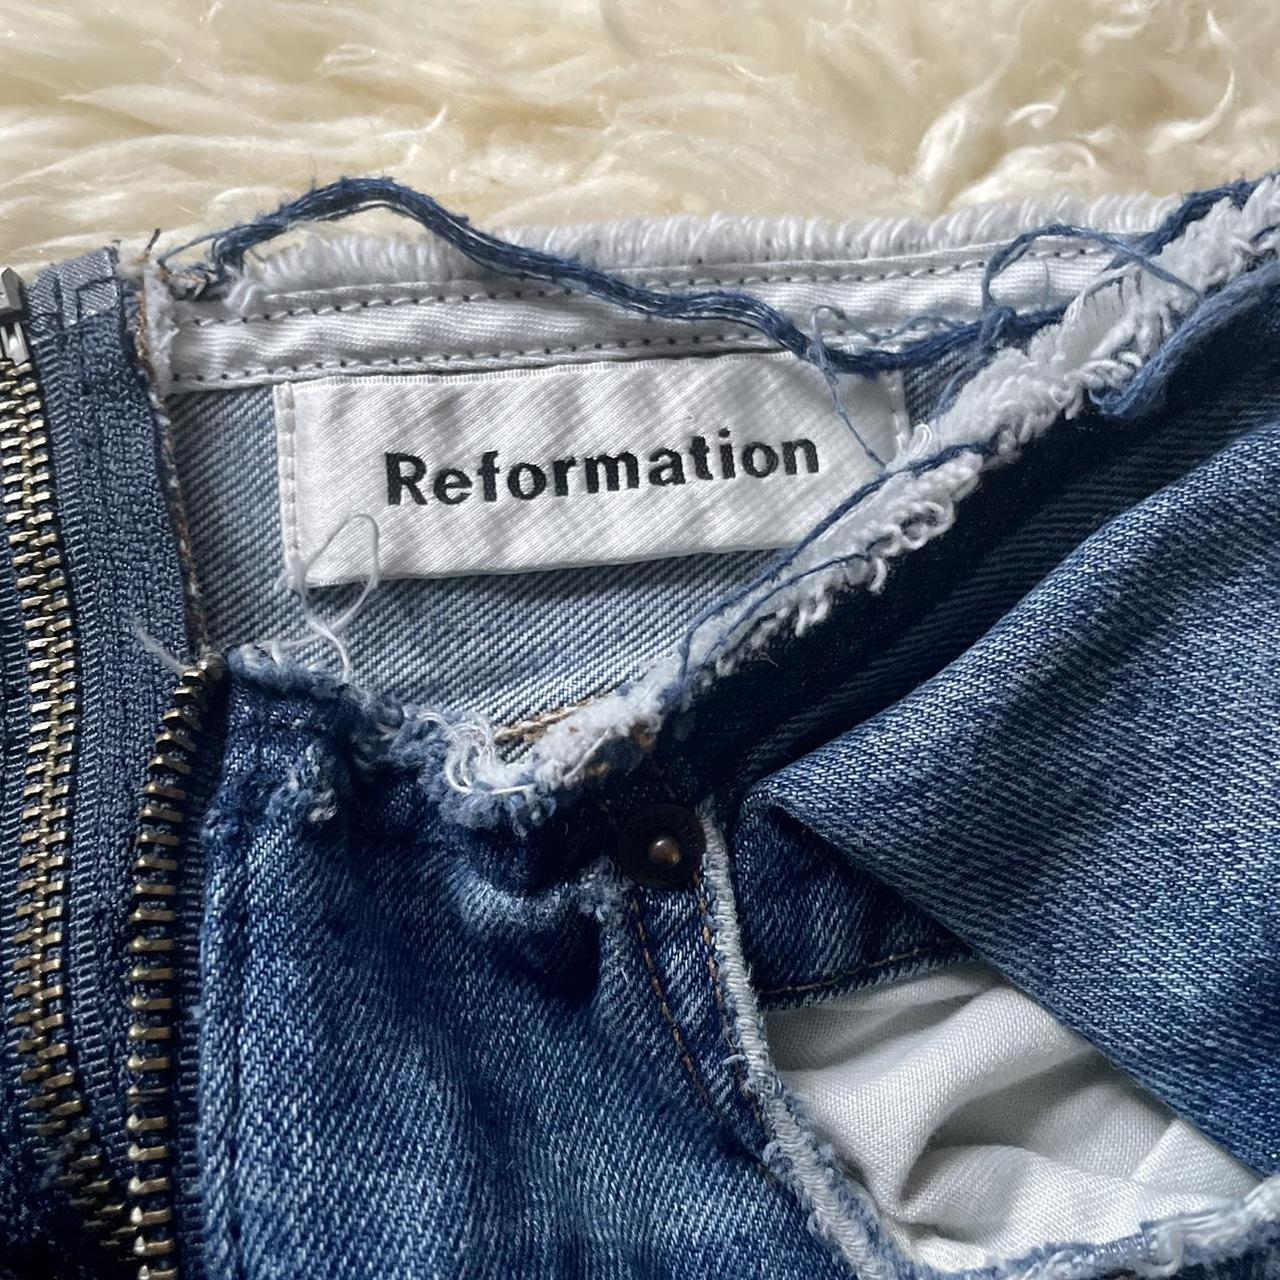 Reformation's Zipper Jeans Unzip Into Two Pieces